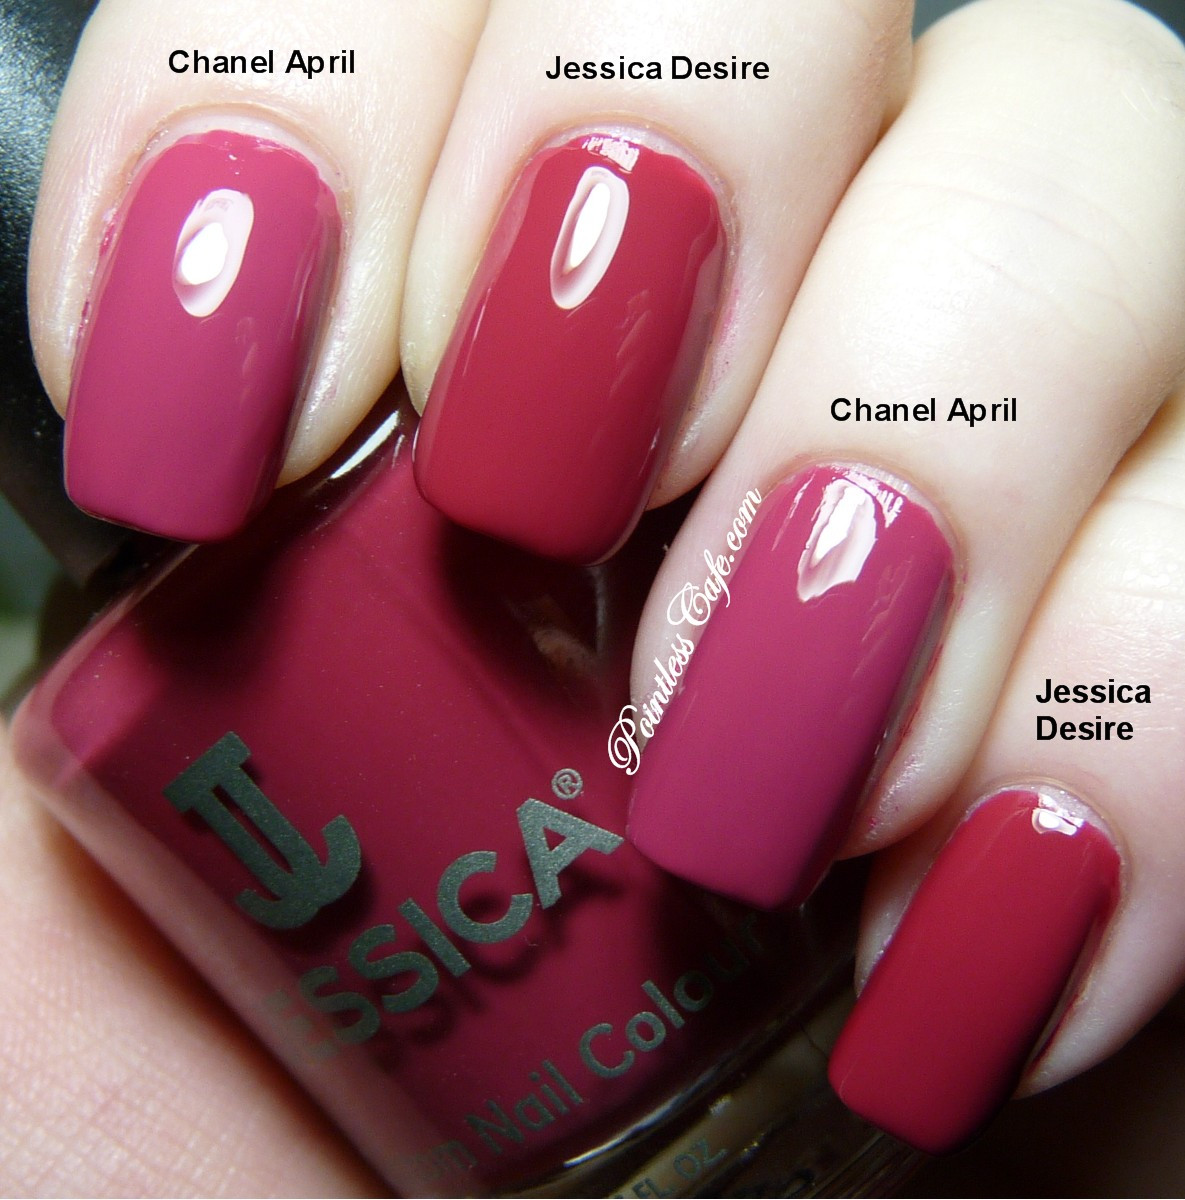 April Nail Colors
 Jessica Custom Nail Colour vs Chanel April May and June